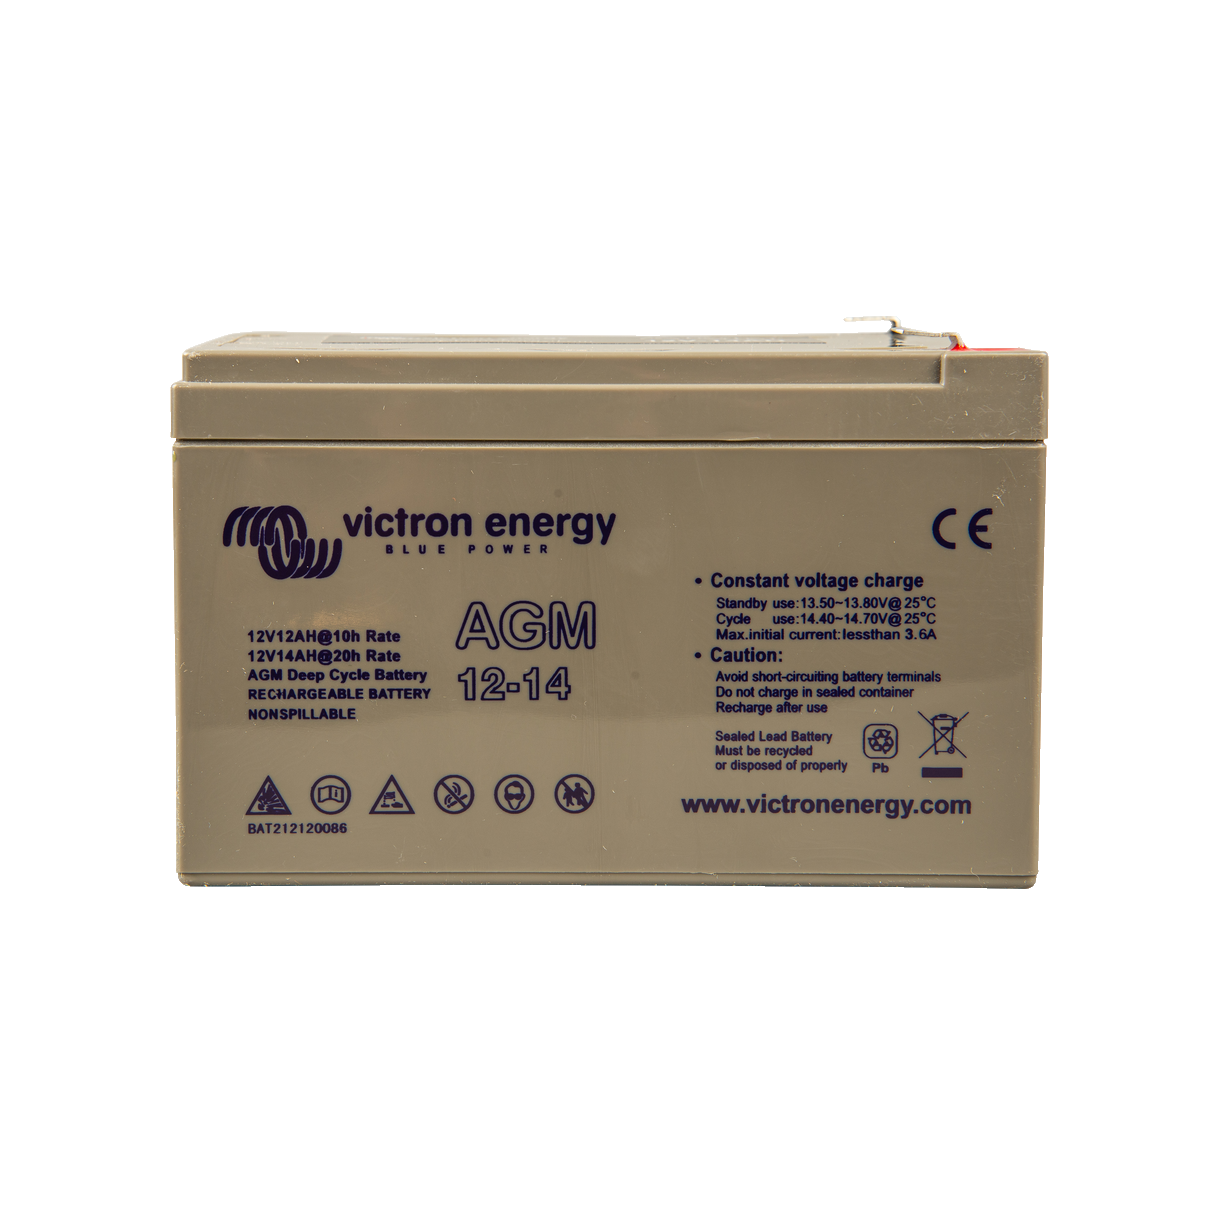 AGM 12V/14 Ah Victron Energy deep cycle battery